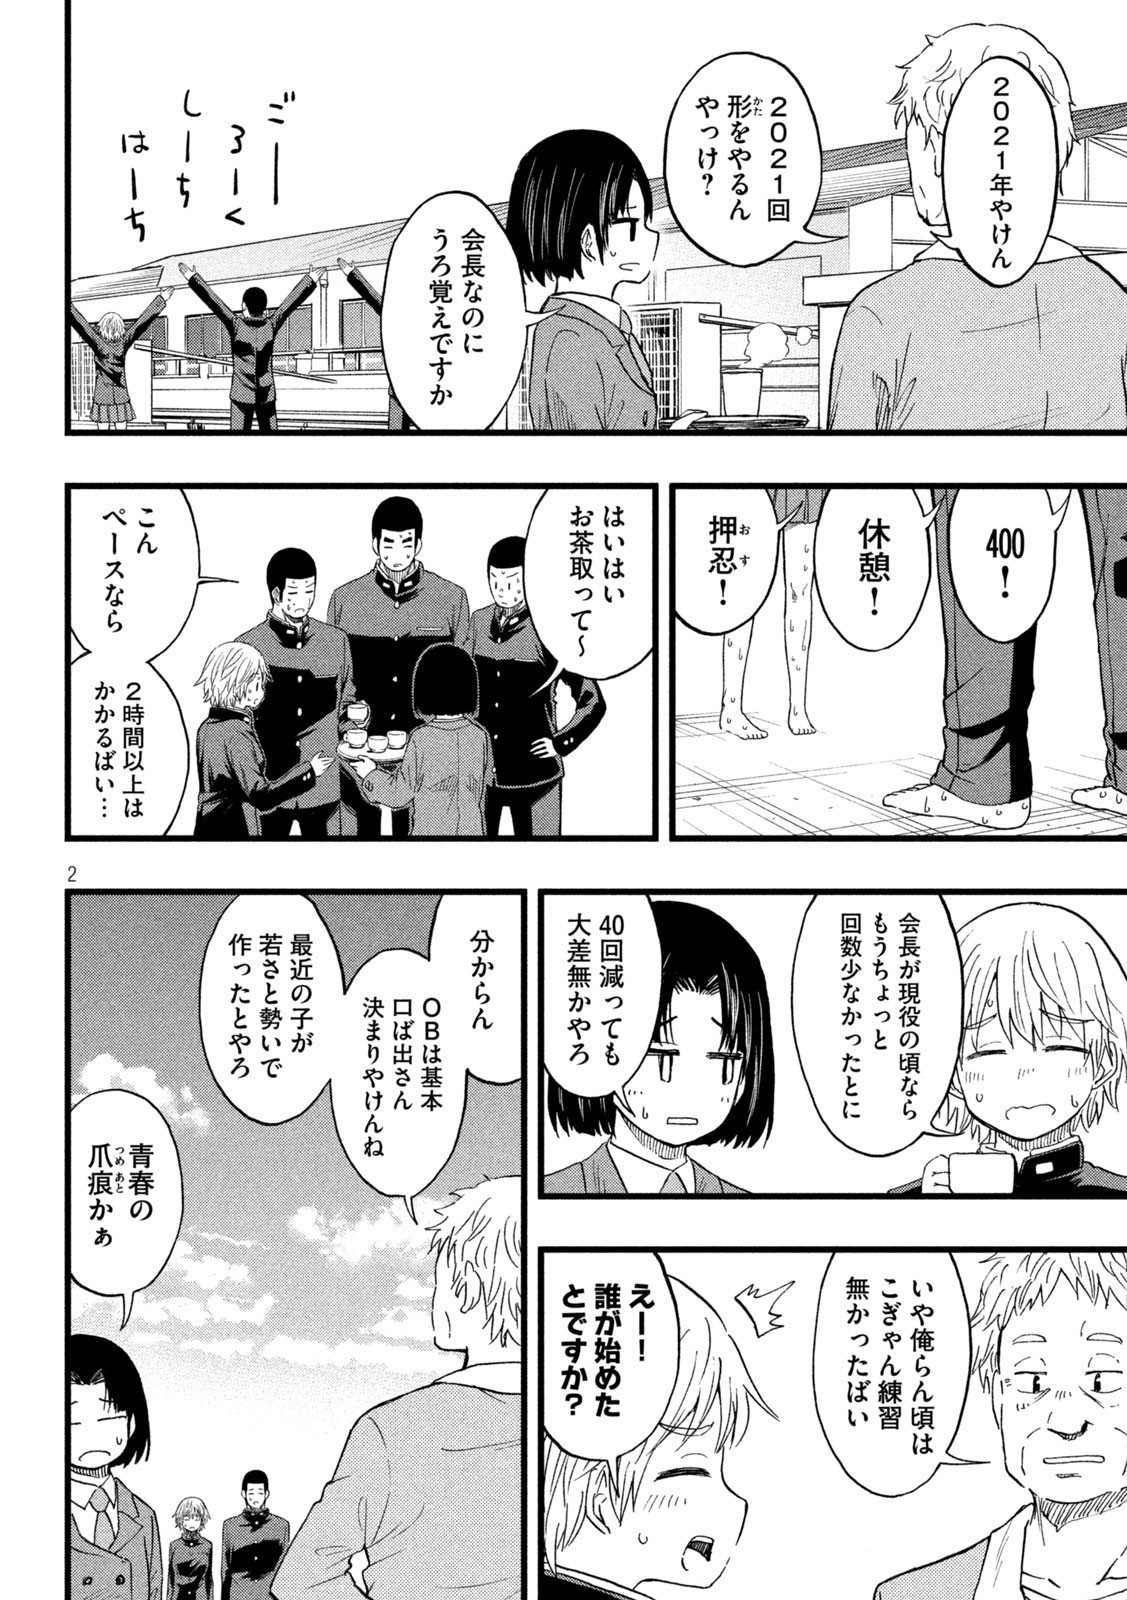 Koharu haru! - Chapter 80 - Page 2